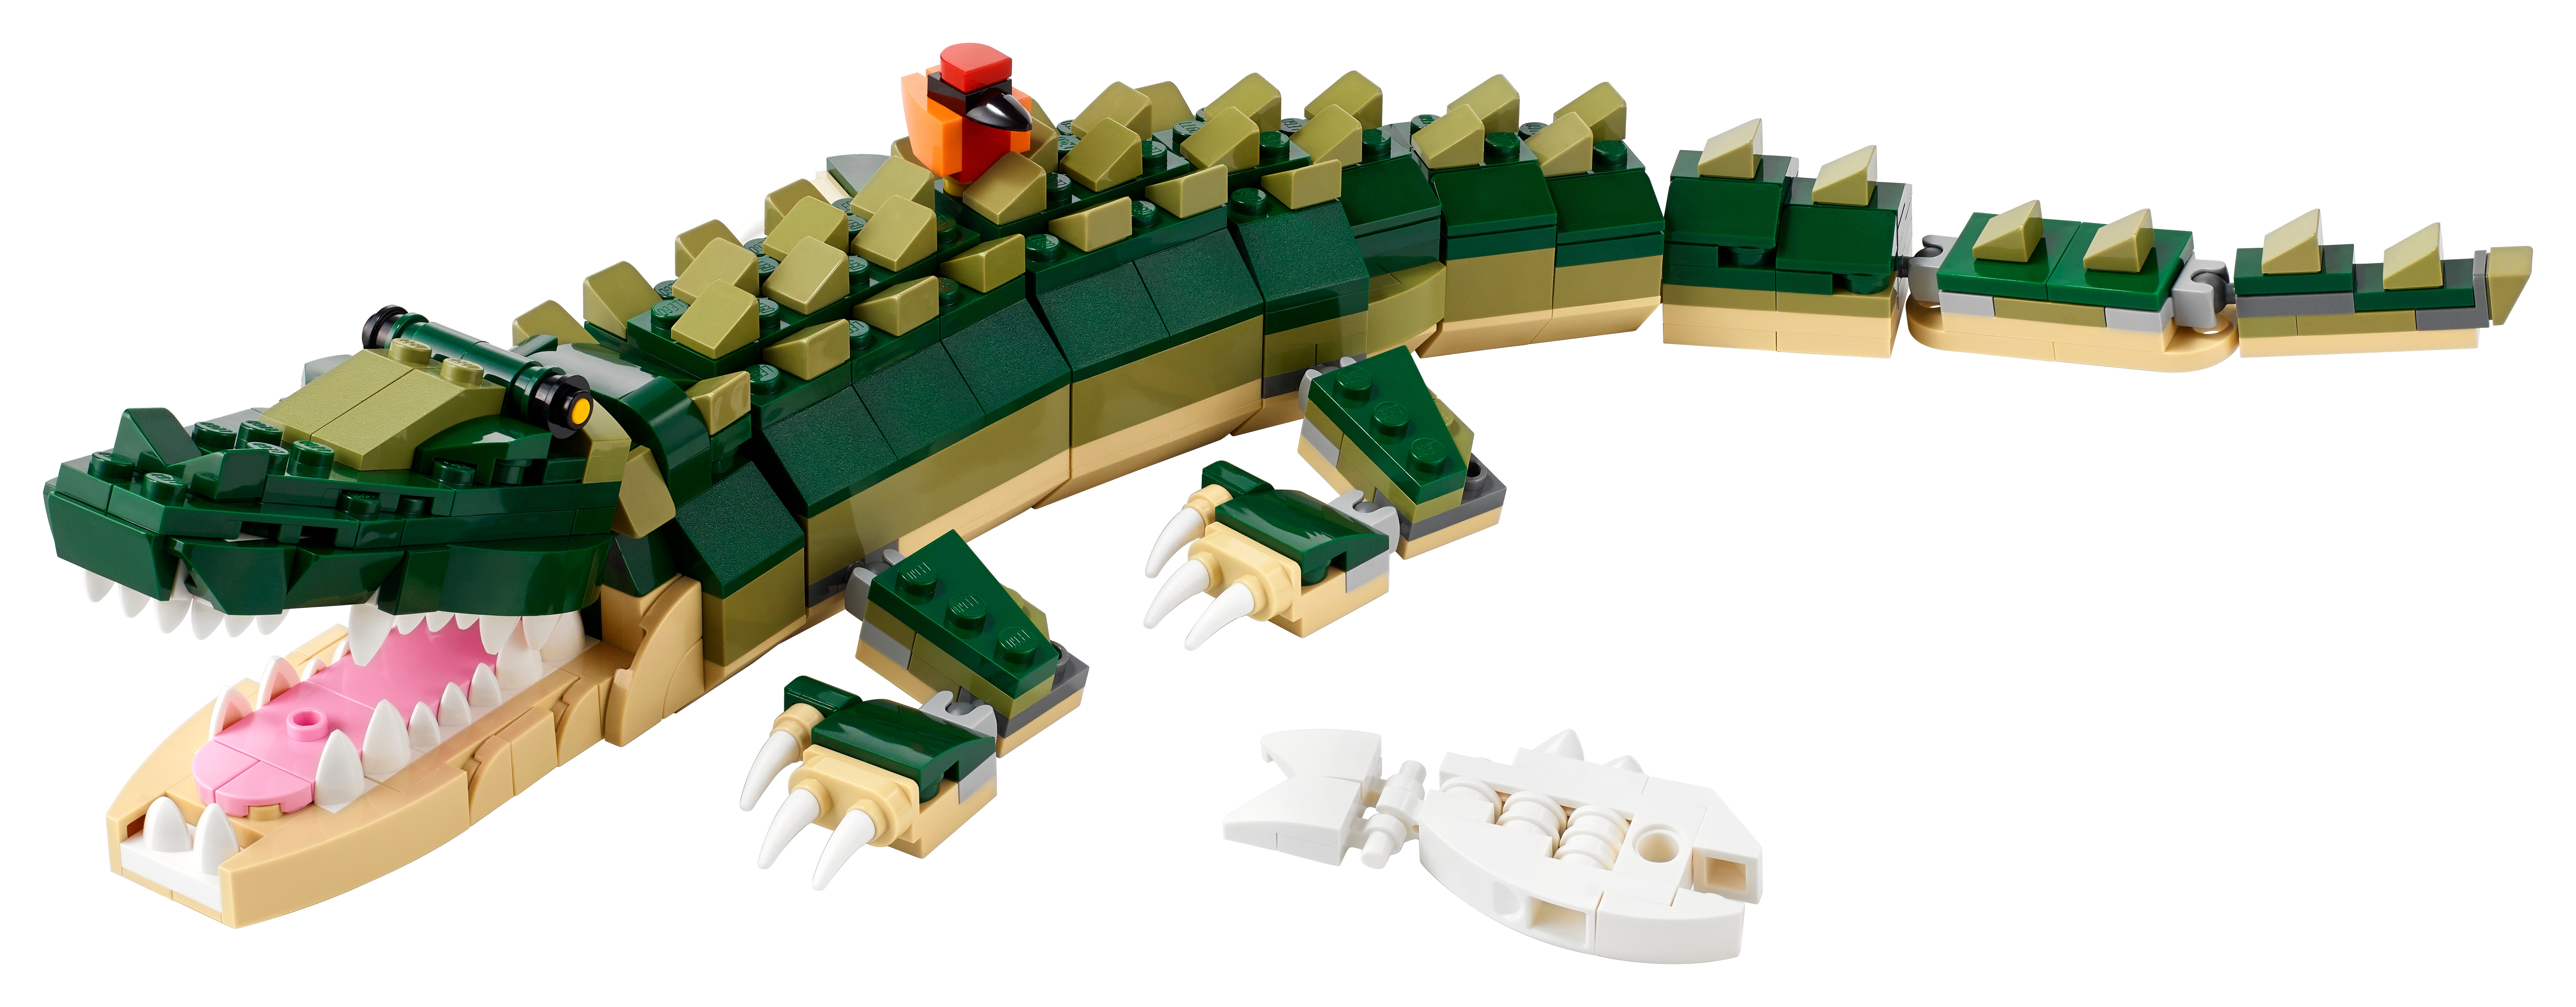 LEGO Creator 3w1 31121 - Krokodyl